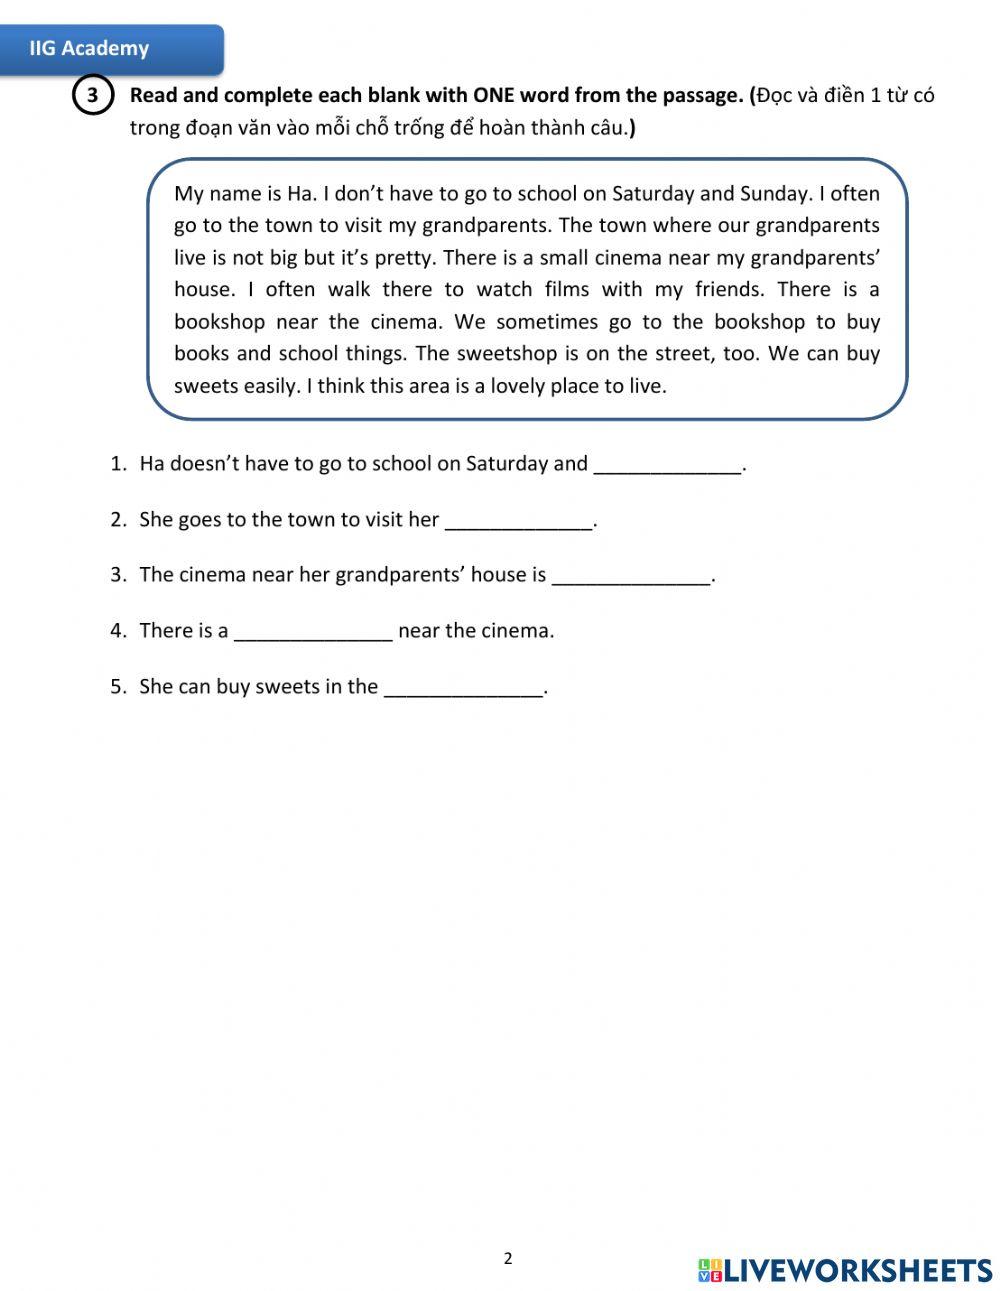 IIG-Grade 5-Worksheet 29